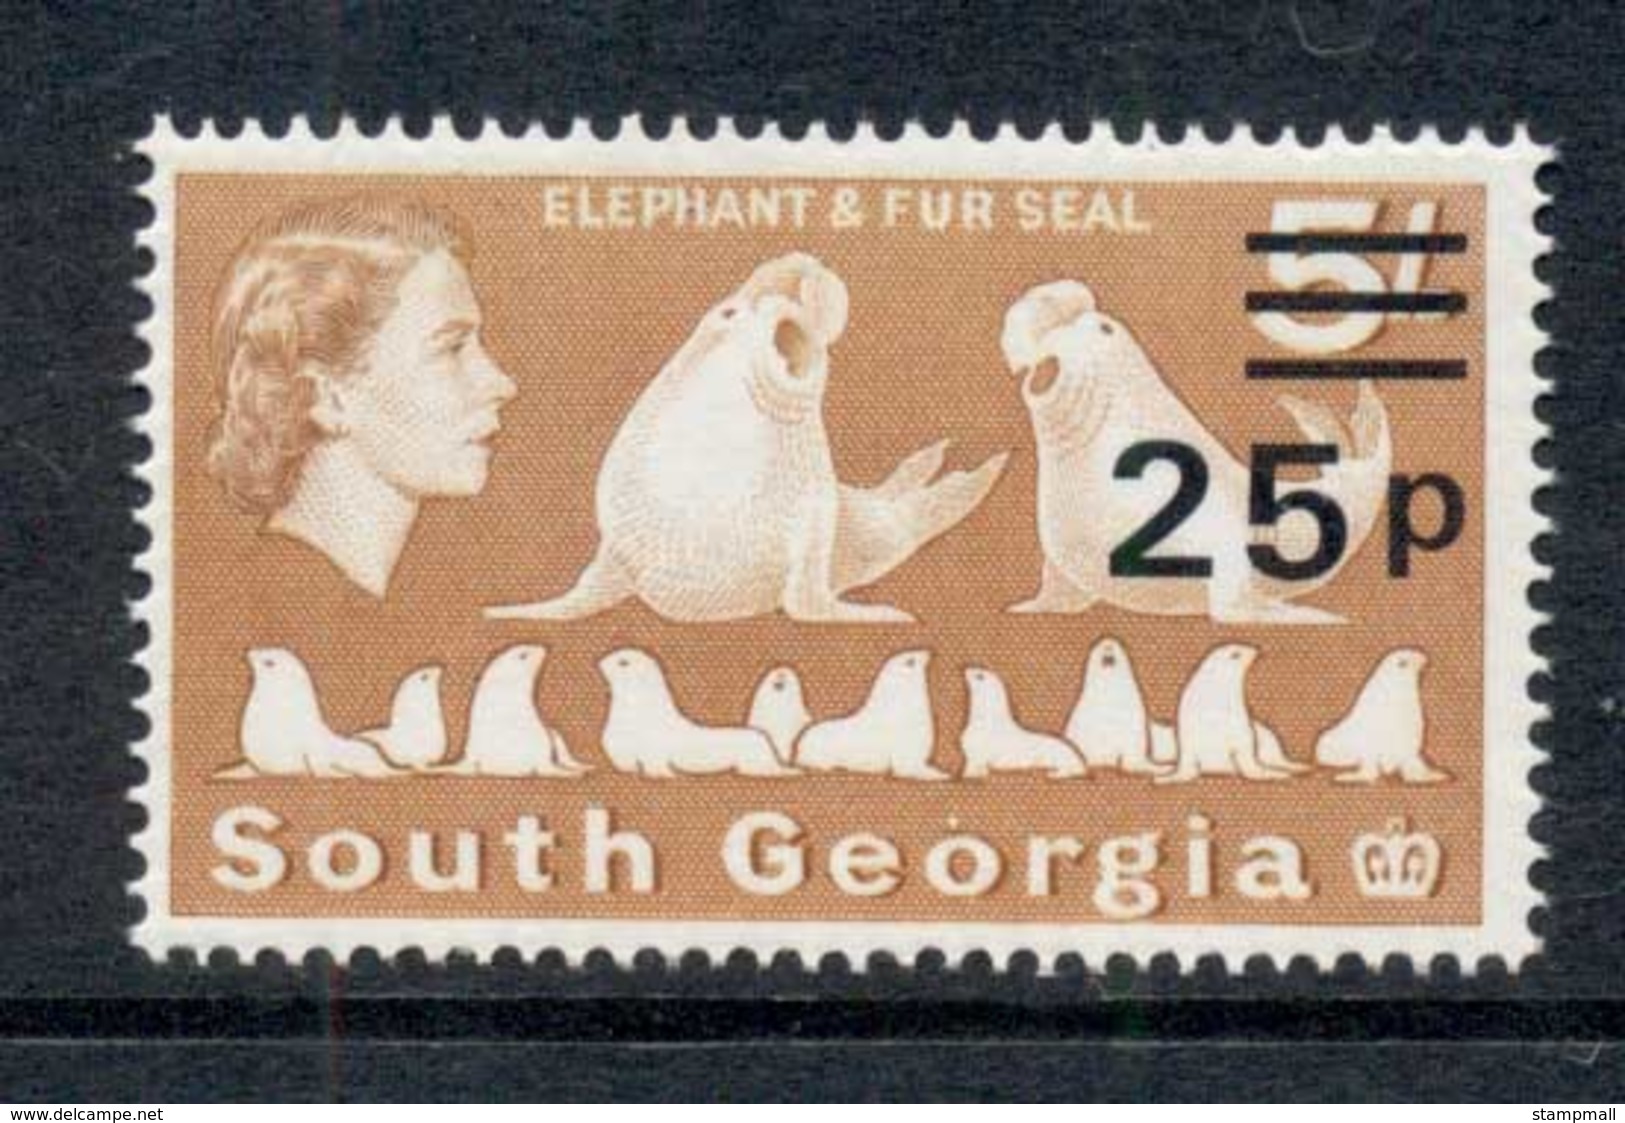 South Georgia 1971-72 QEII Pictorial Elephant & Fur Seals 25p On 5/- MUH - South Georgia